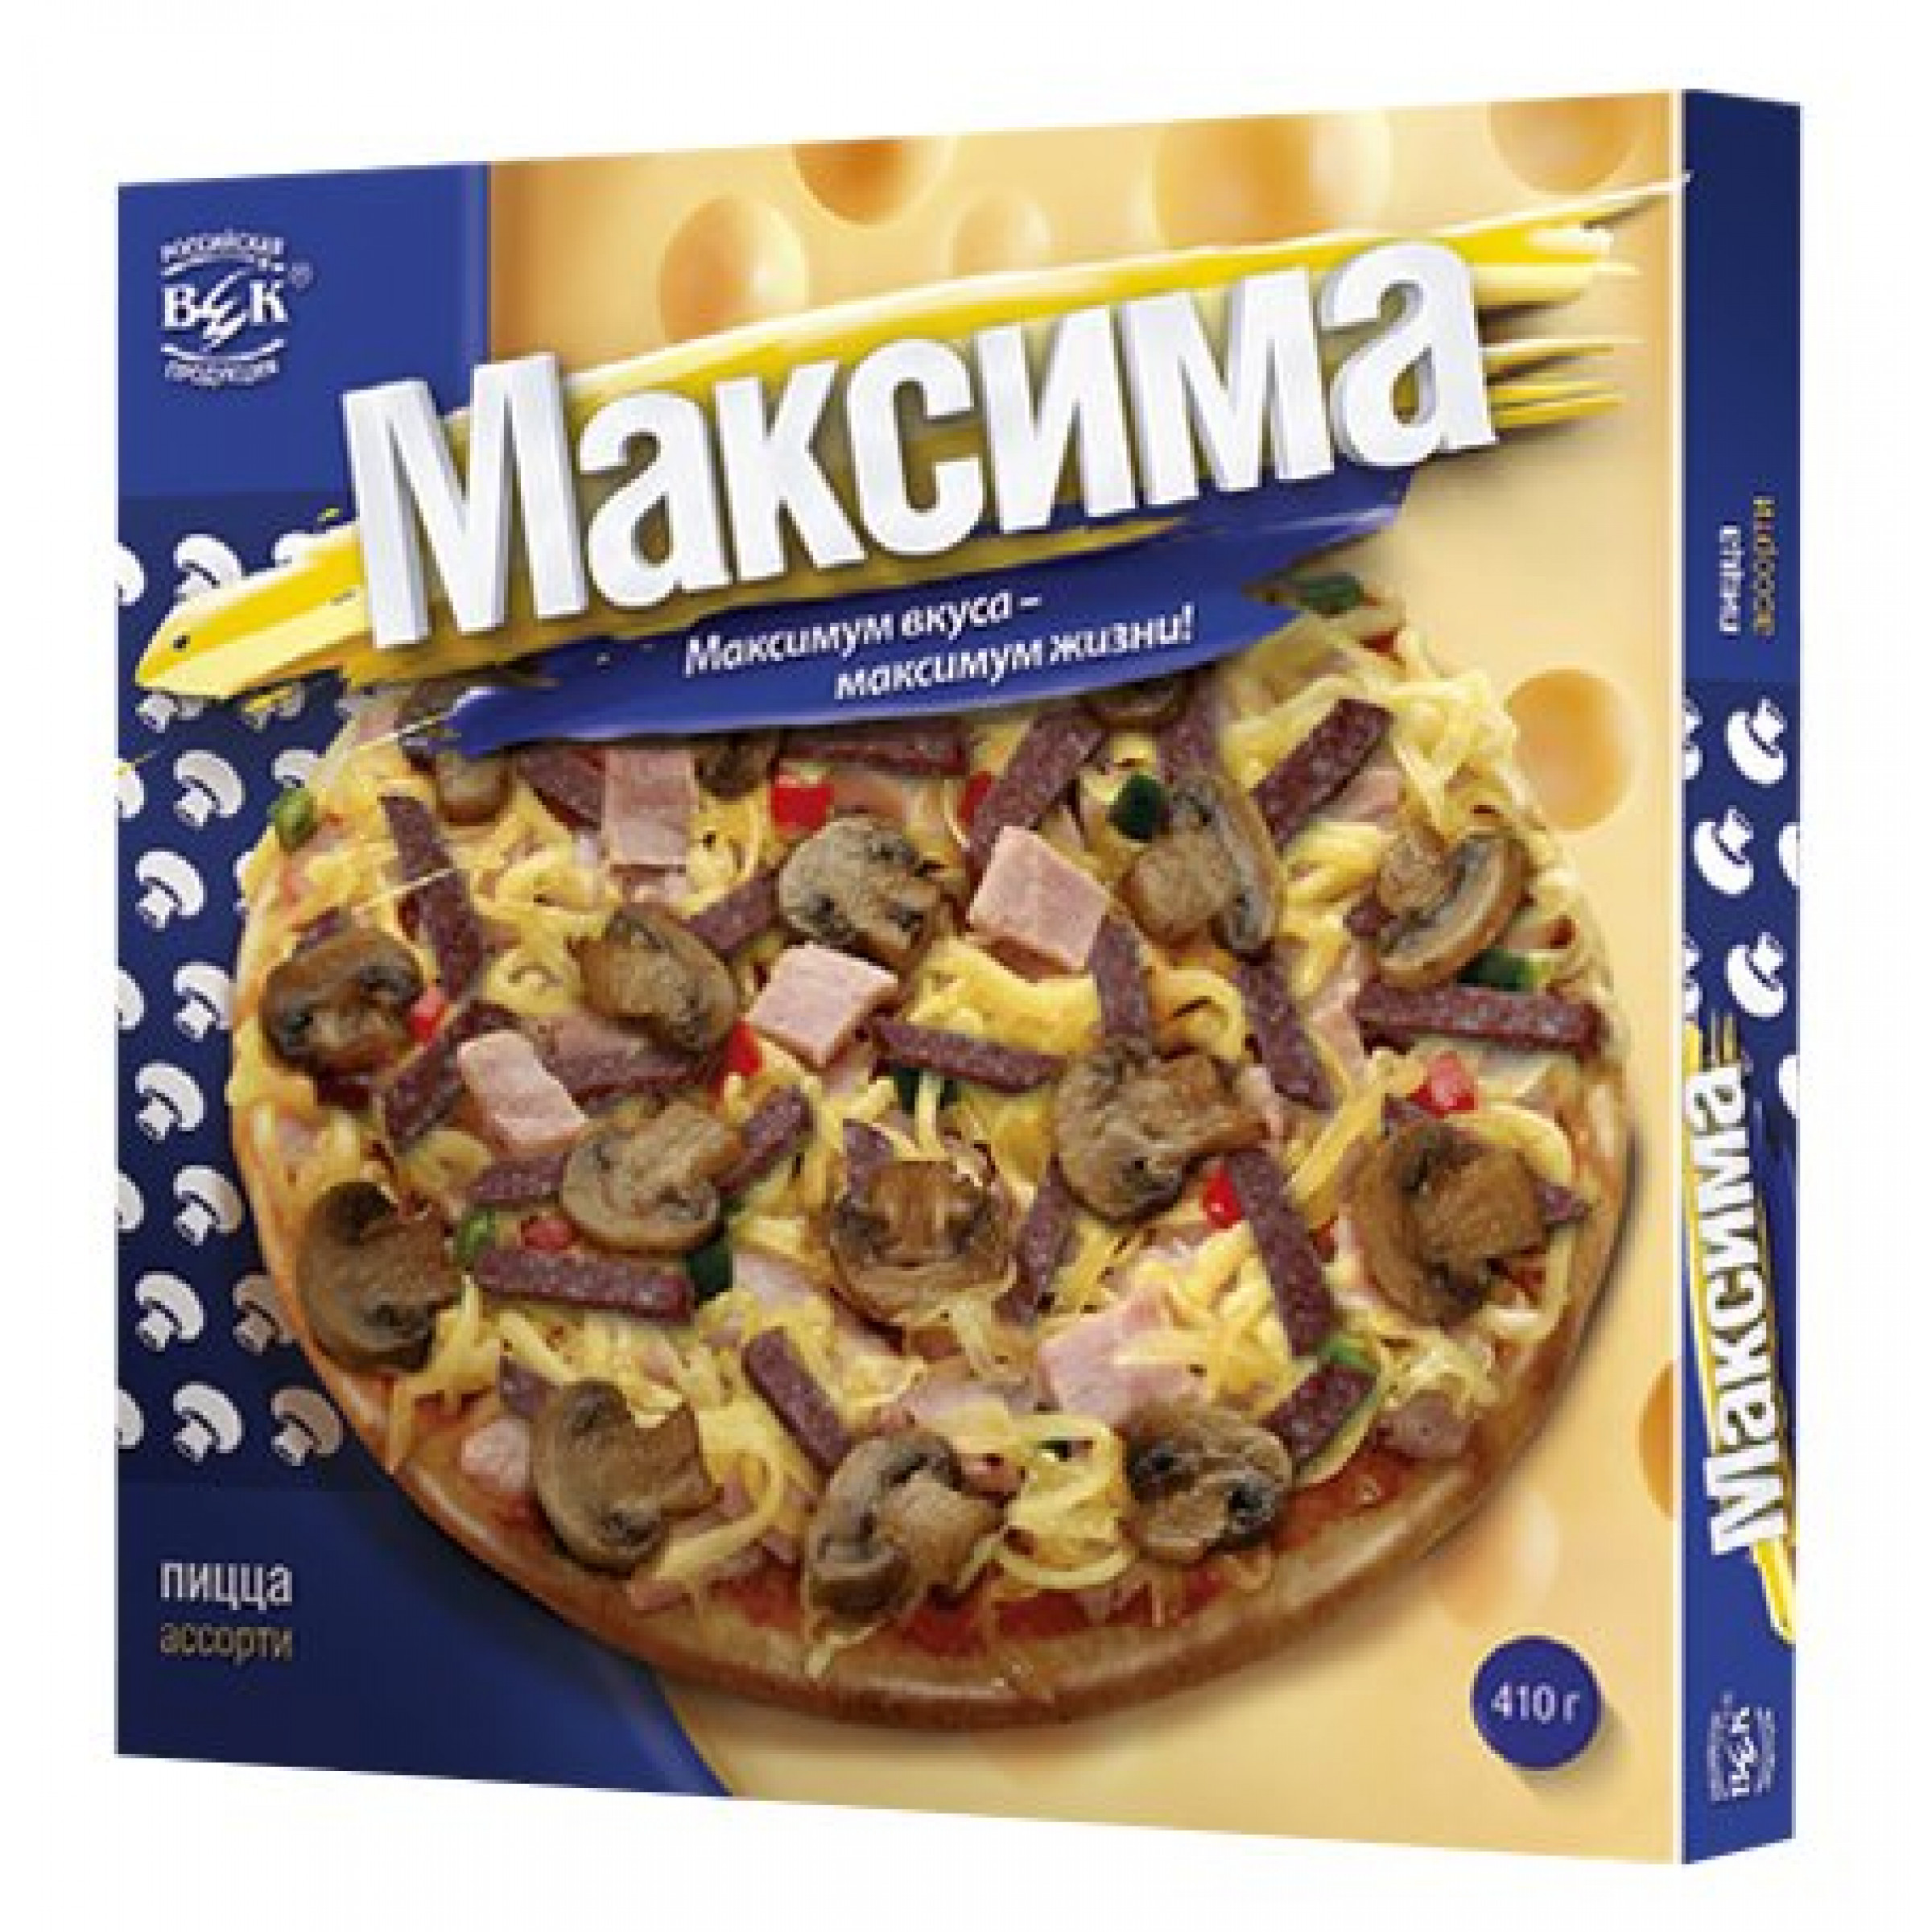 Пицца Максима ассорти в коробочке, 410гр